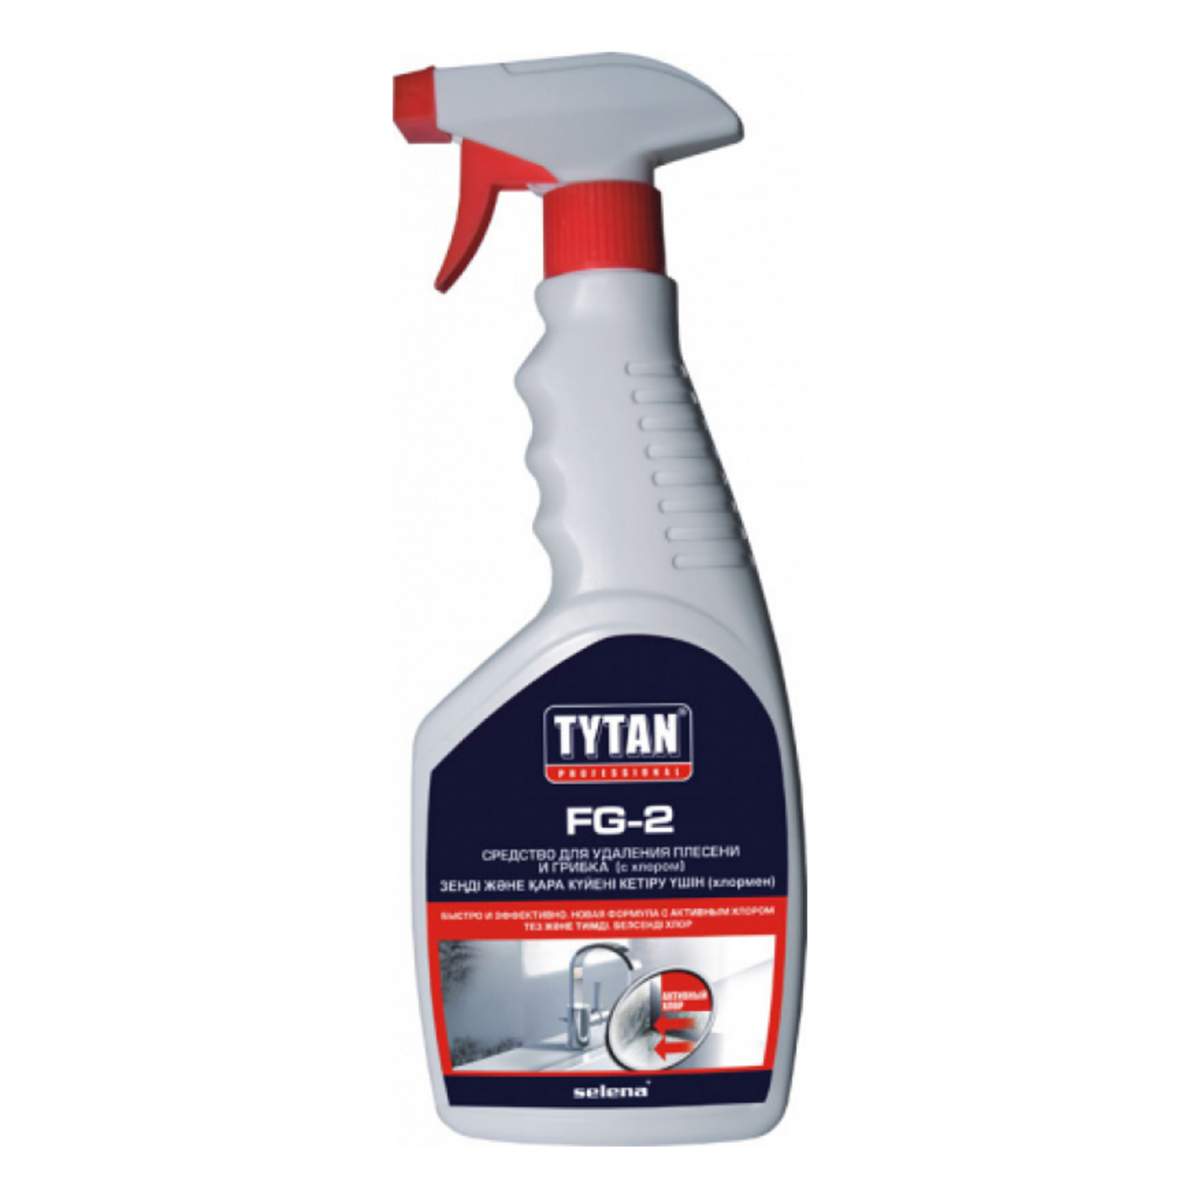 Антисептик против плесени и грибка с хлором Tytan Professional FG-2 16120, 500 мл tetra algumin средство против водорослей на 500 л 250 мл 250 мл